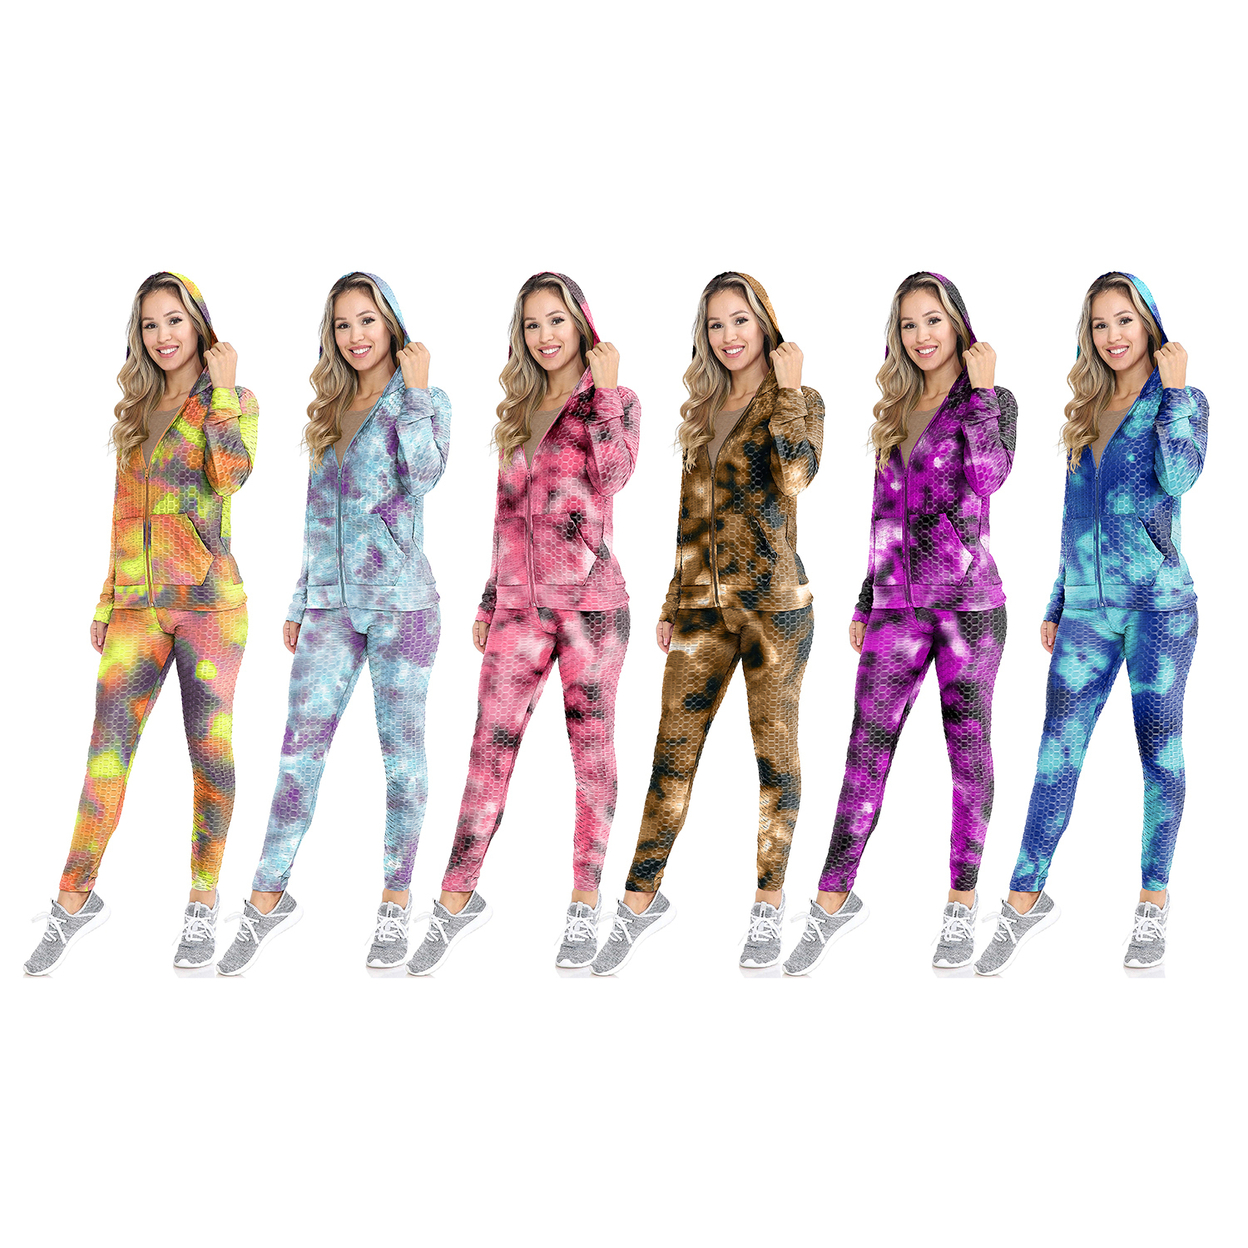 2-Piece: Women's Athletic Anti-Cellulite Textured Tie Dye Body Contour Yoga Track Suit W/ Hood - Large, Tie Dye